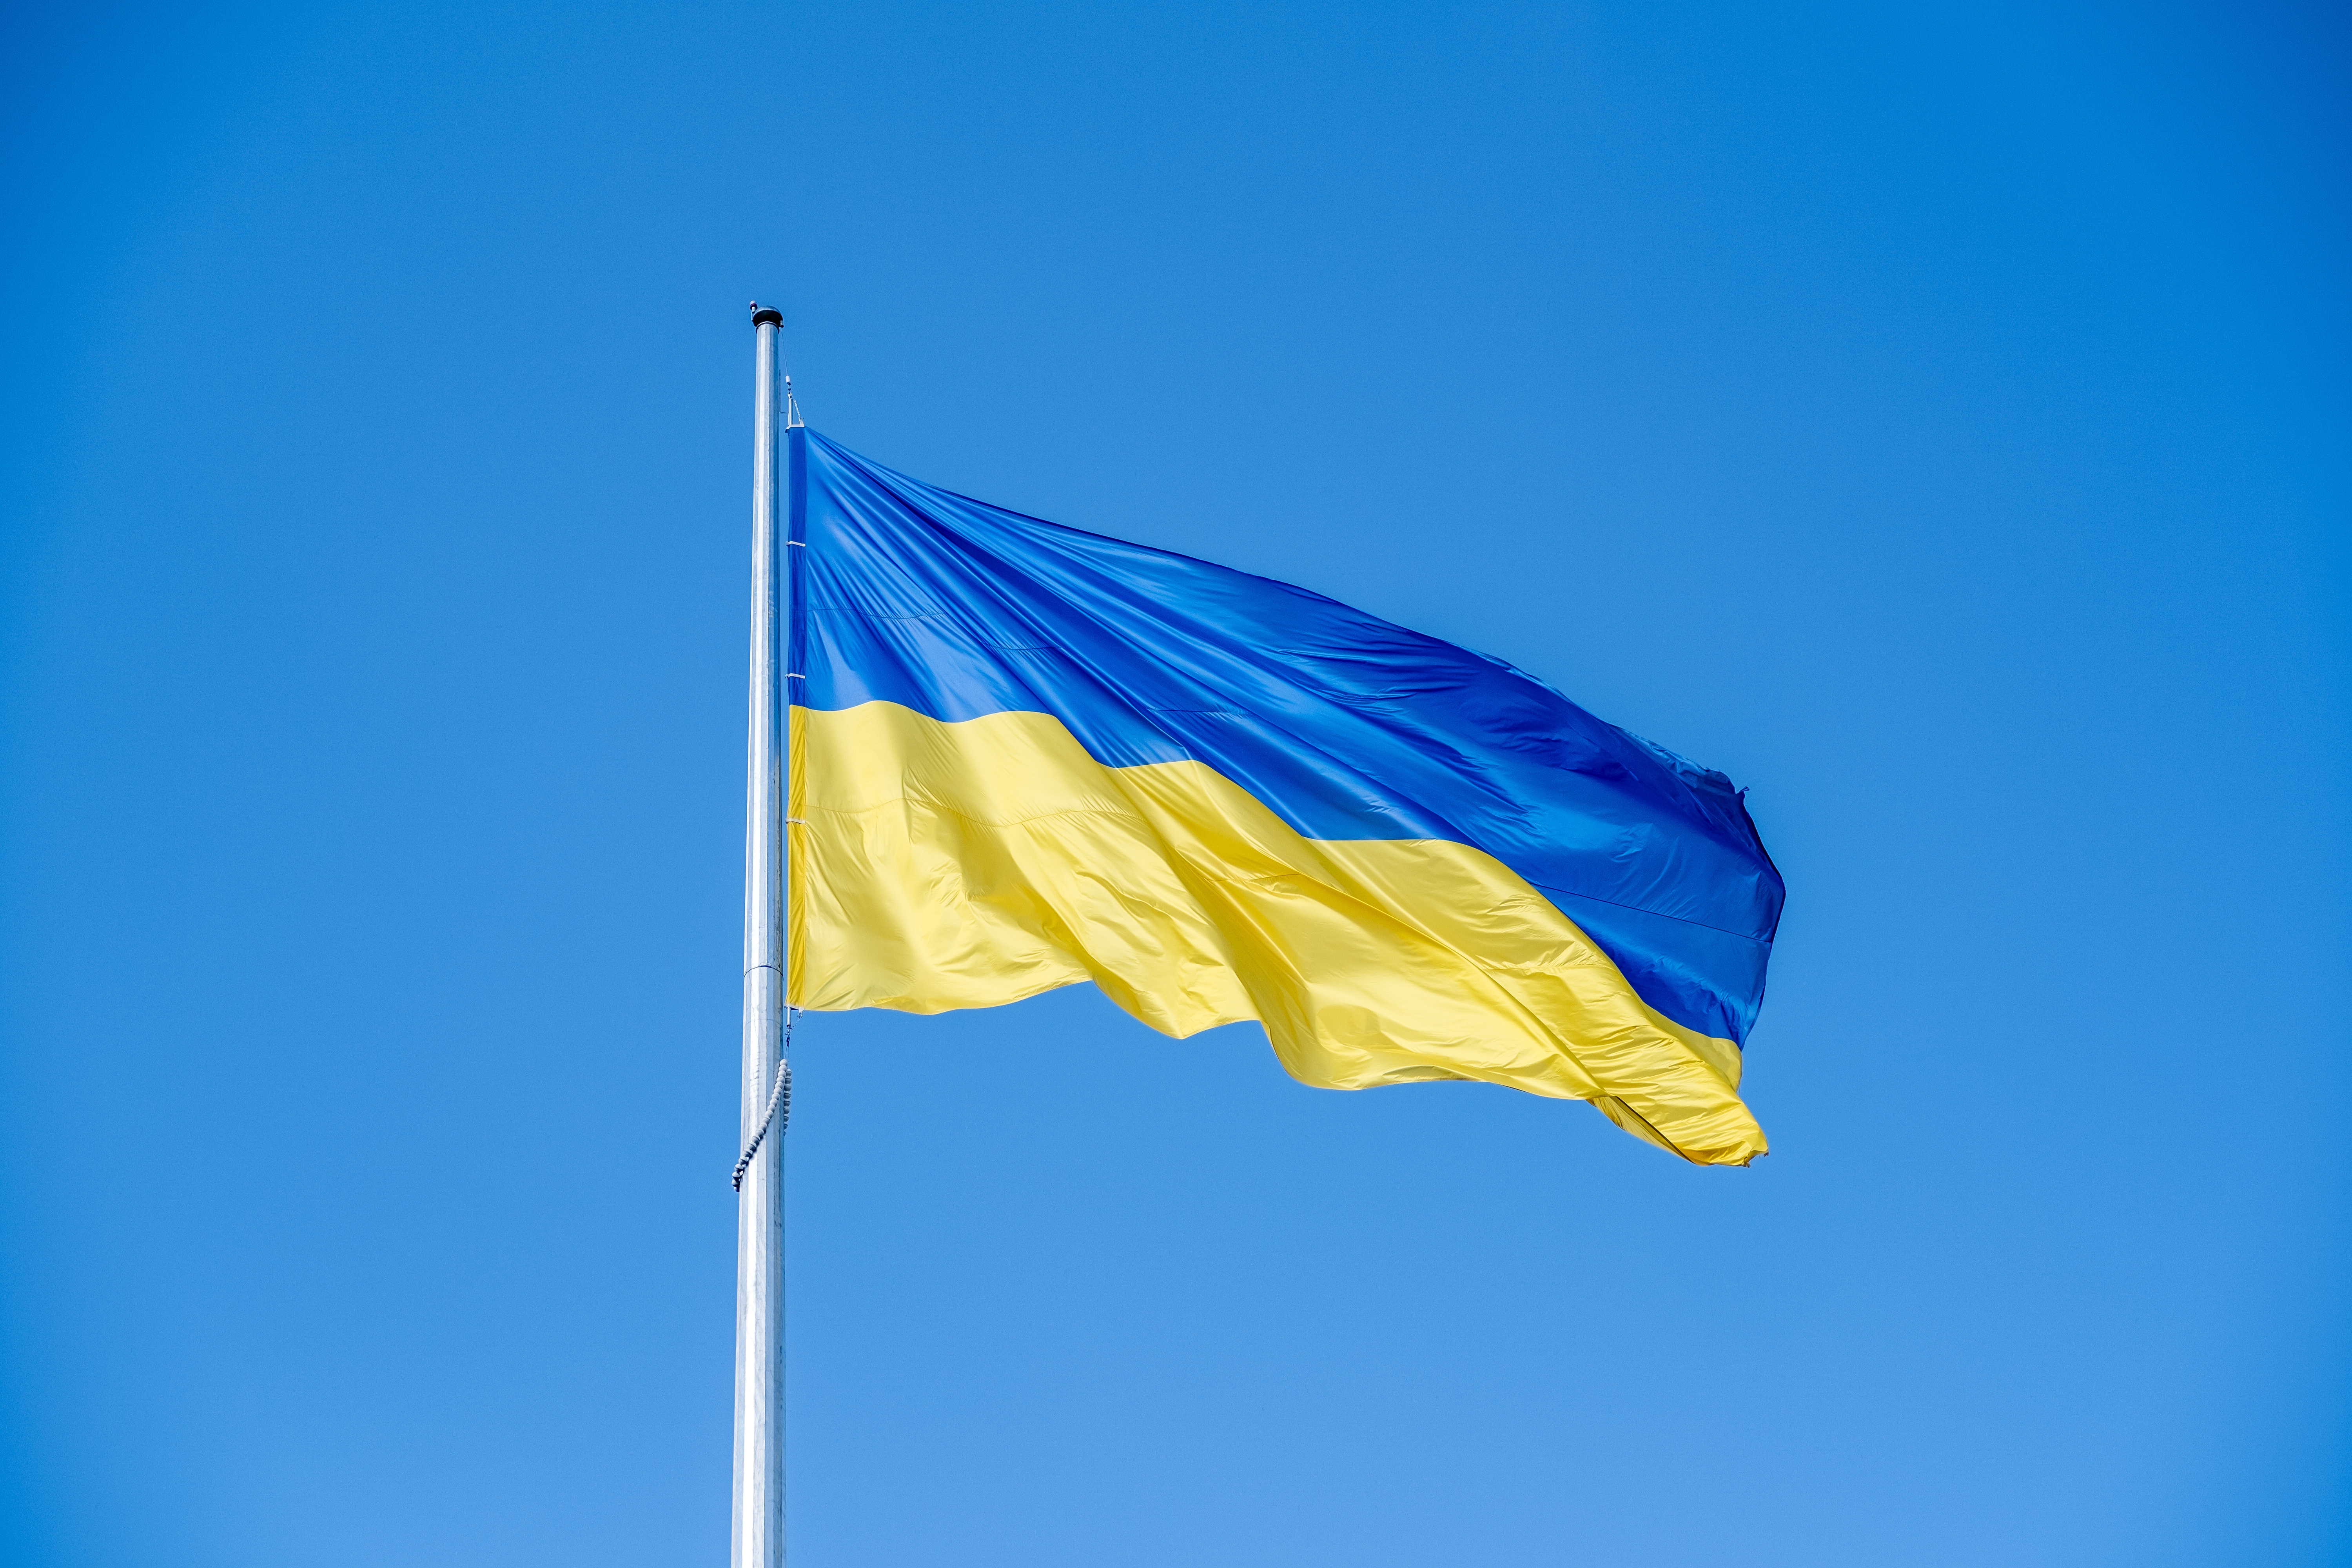 Support for Ukrainian Parolees